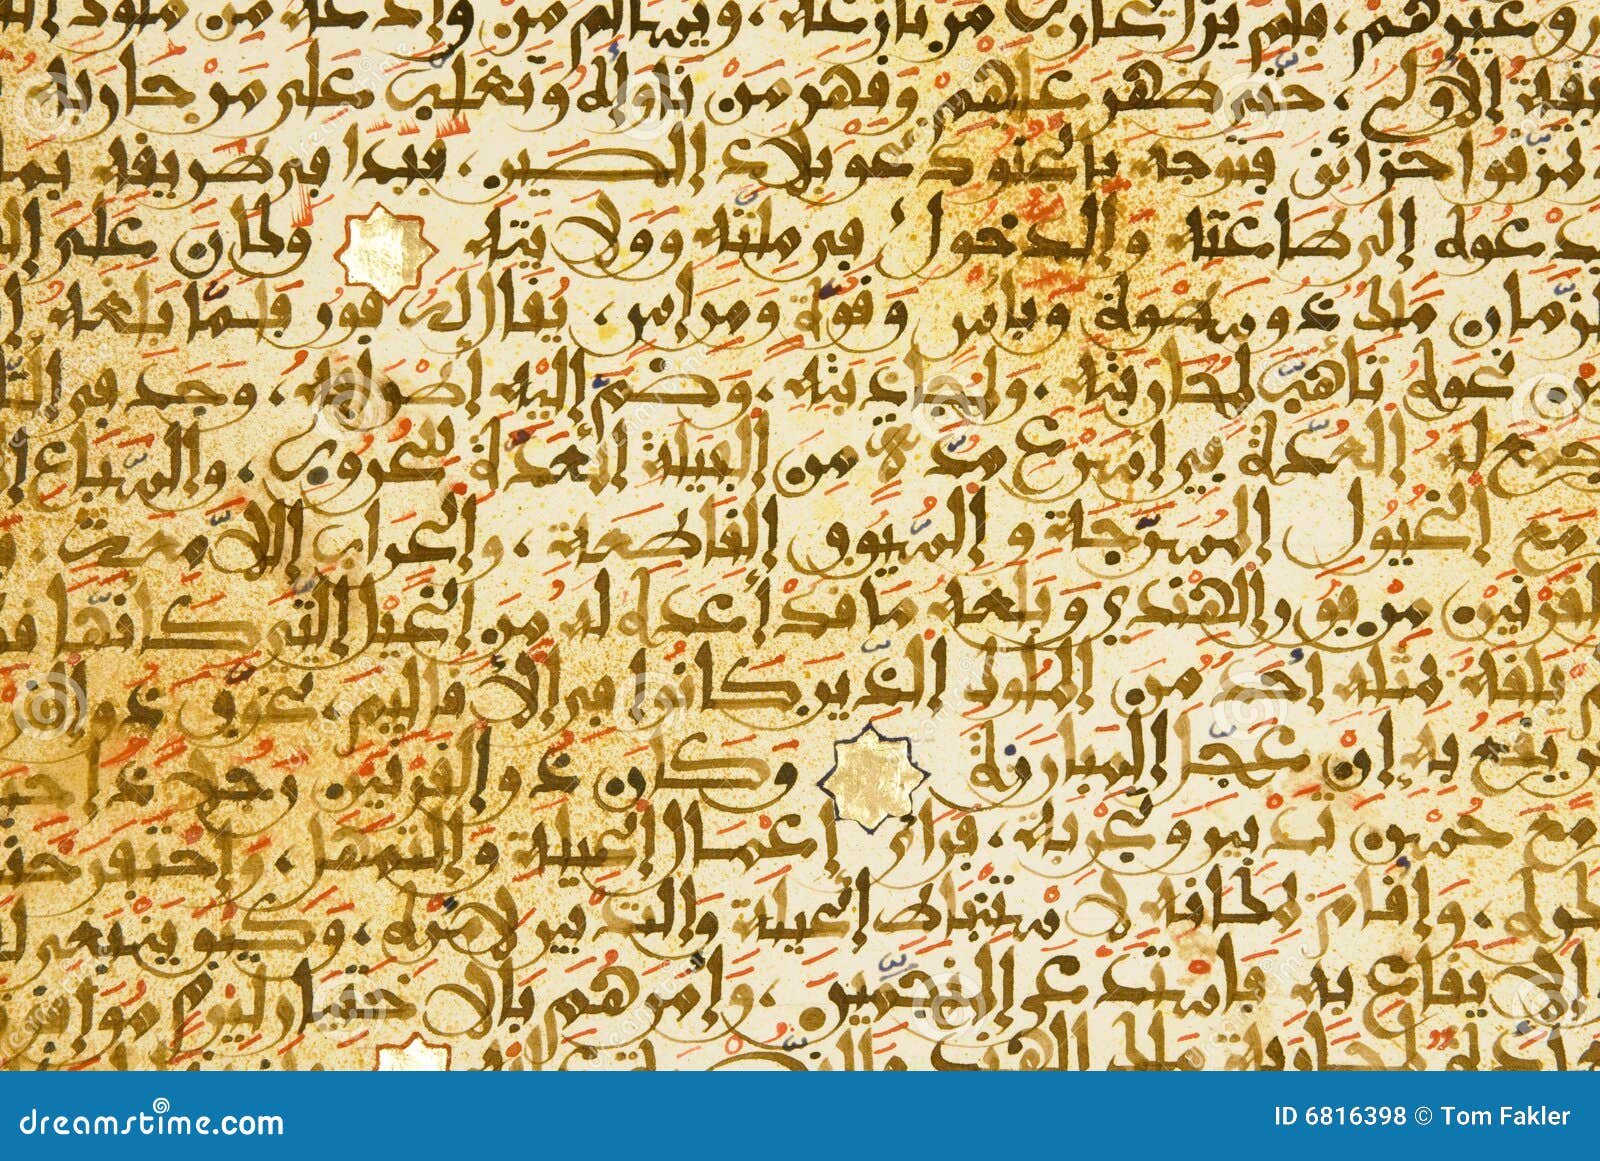 arabic calligraphy manuscript on paper